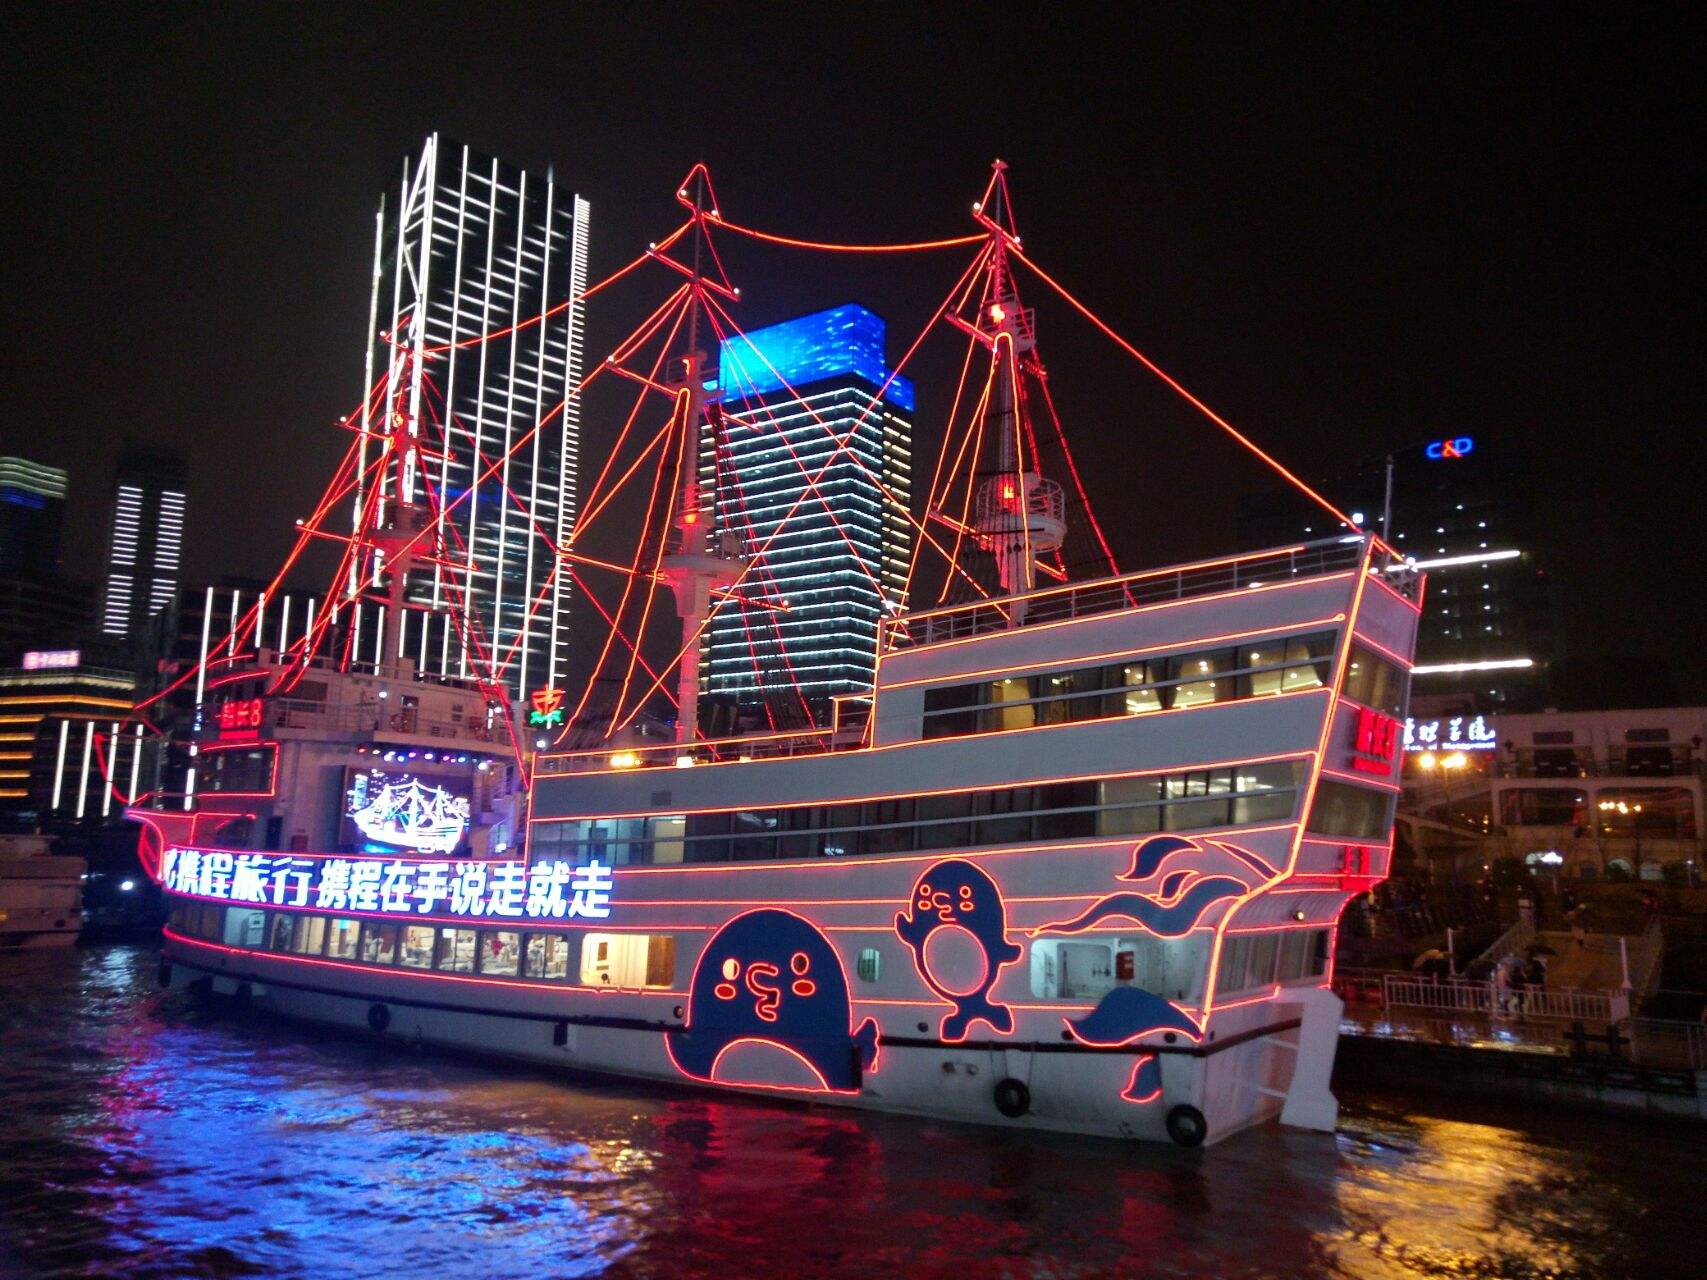 night cruise along the Huangpu River